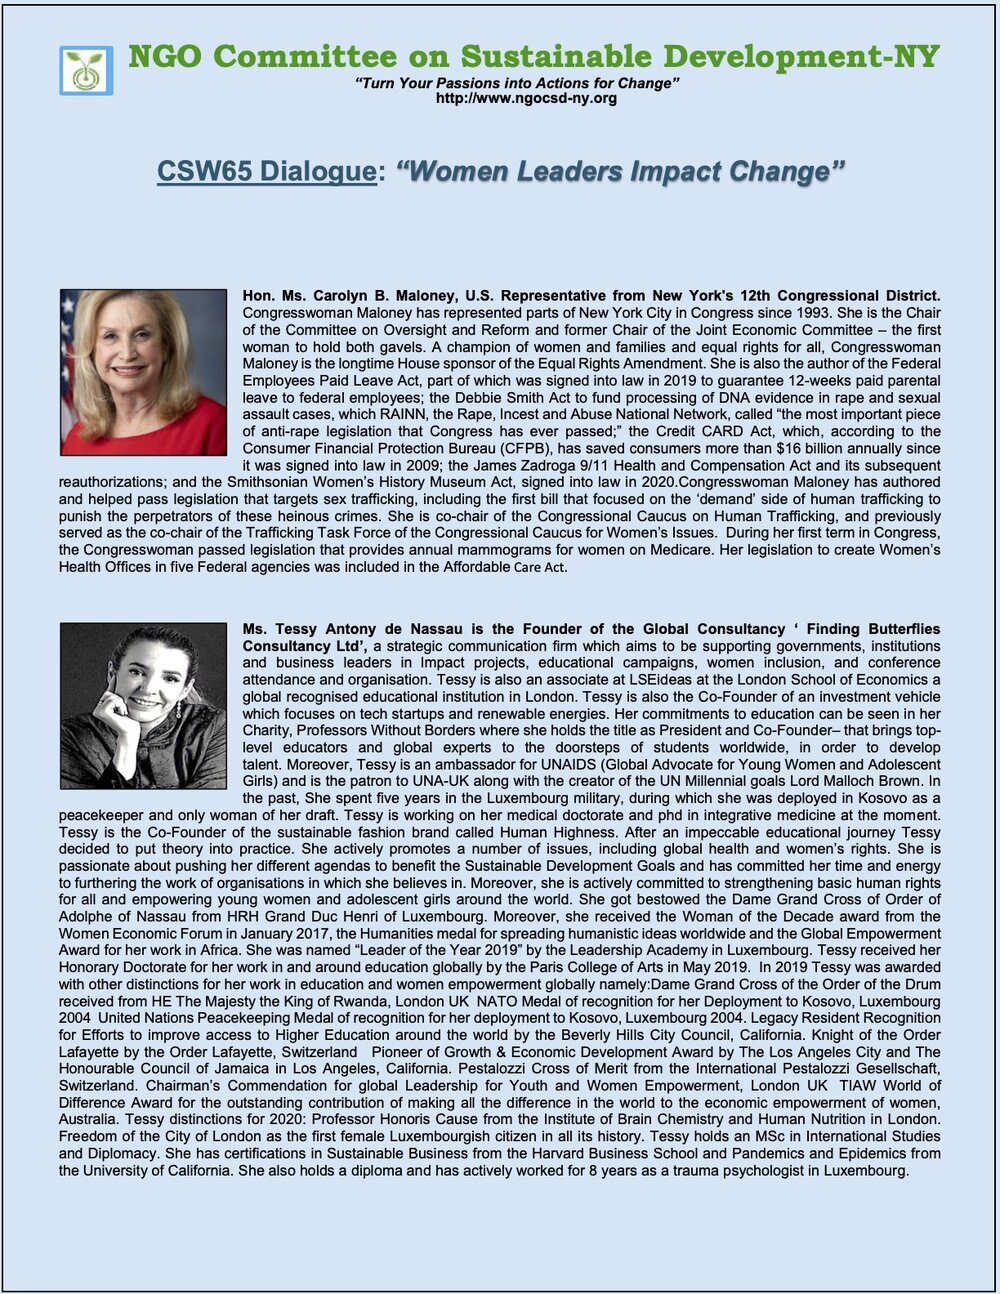 NGOCSD-NY+3-25-2021+C4UNWN+Women+Leaders+Impact+Change+Photo-Bios+A3.jpg